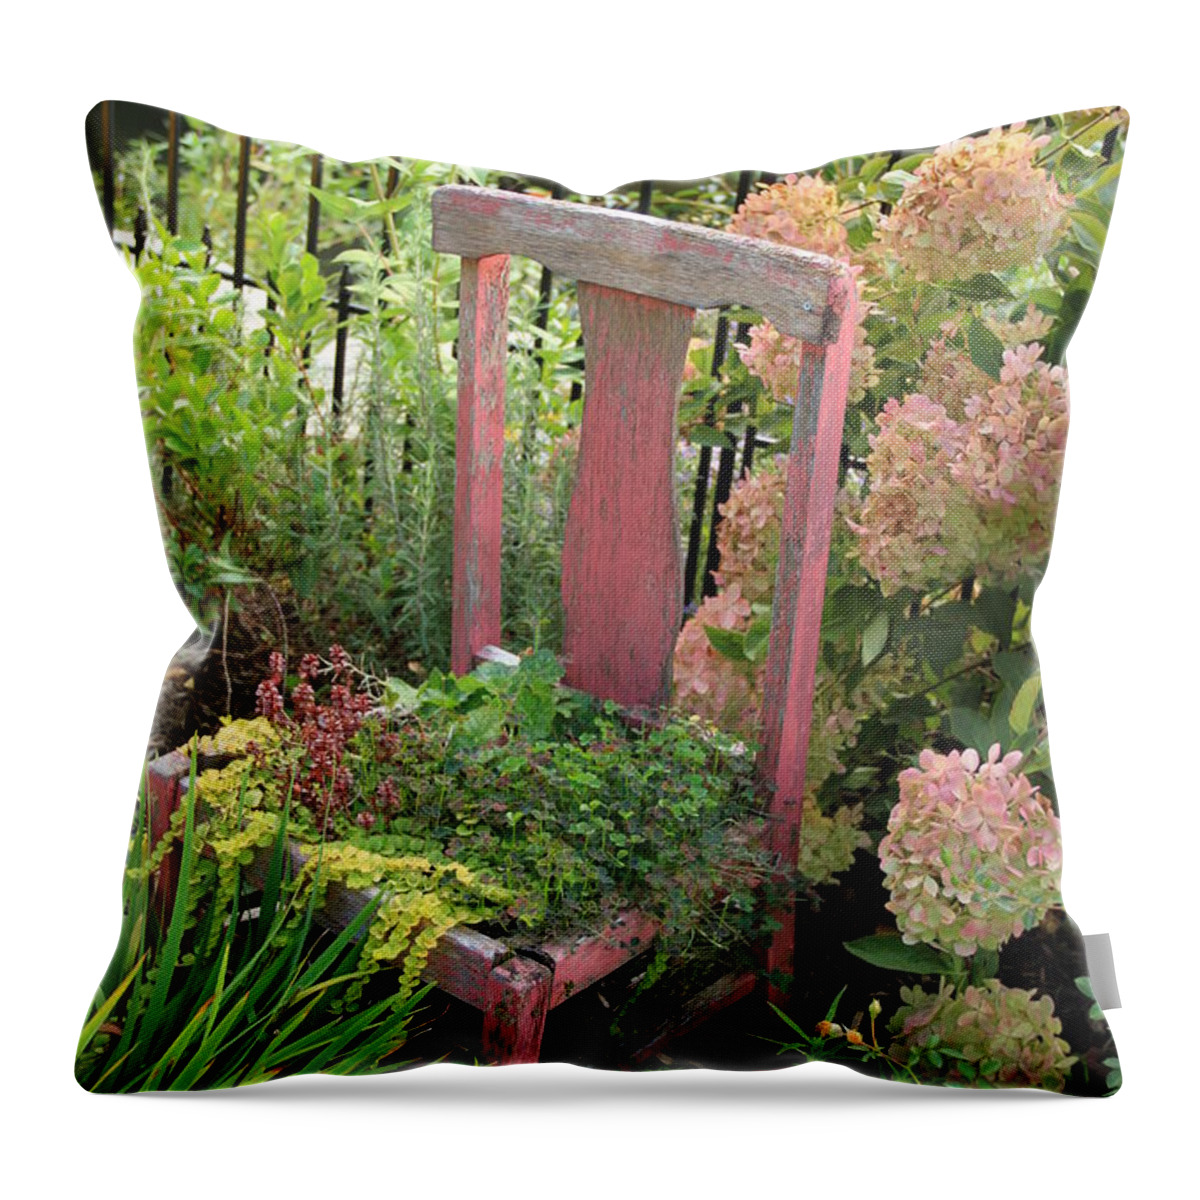 Flowering Bridge Throw Pillow featuring the photograph Pink Chair by Karen Ruhl